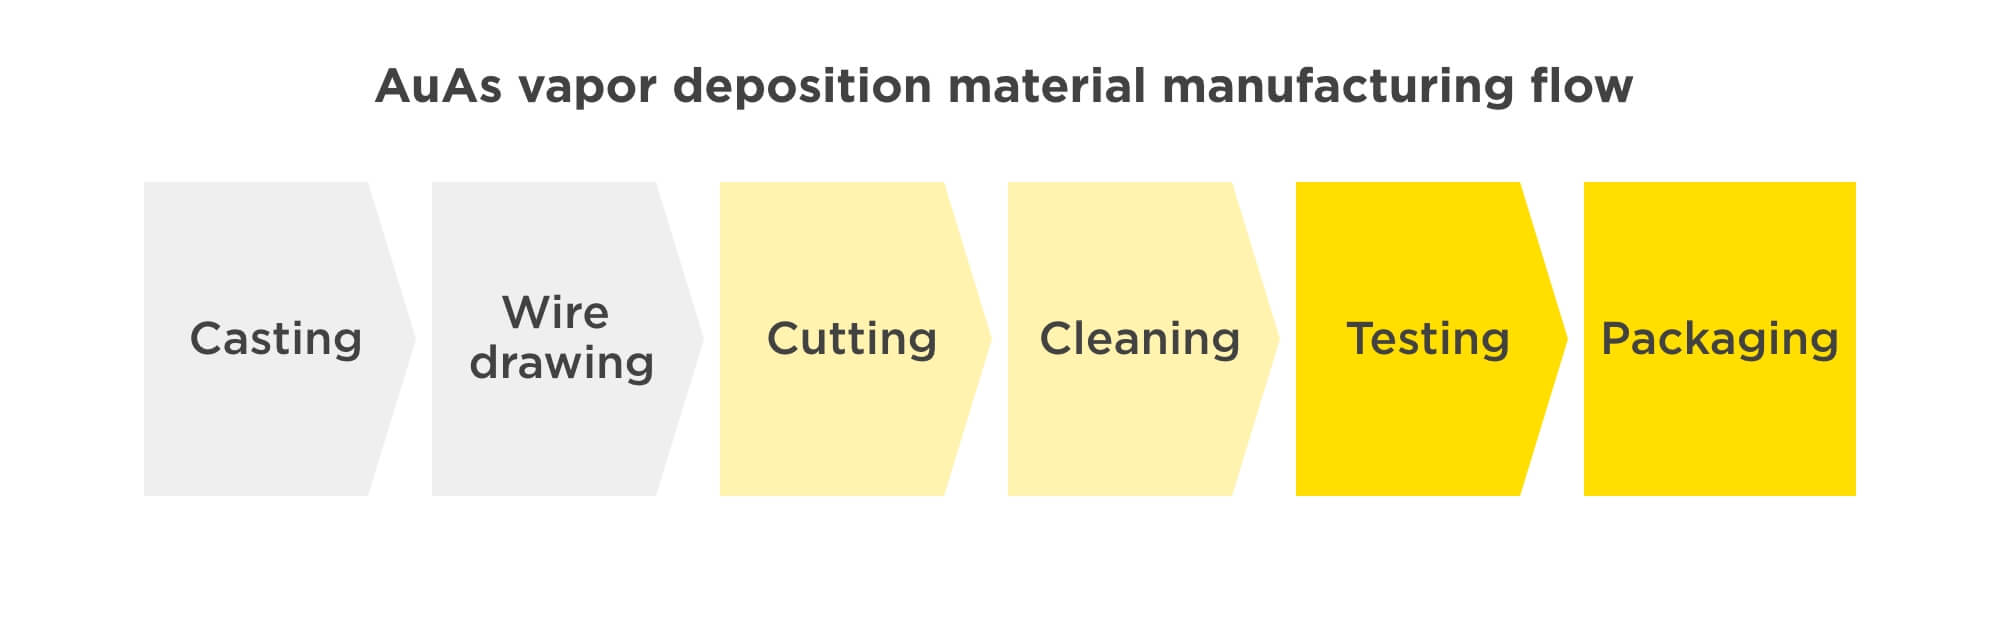 AuAs vapor deposition material manufacturing flow